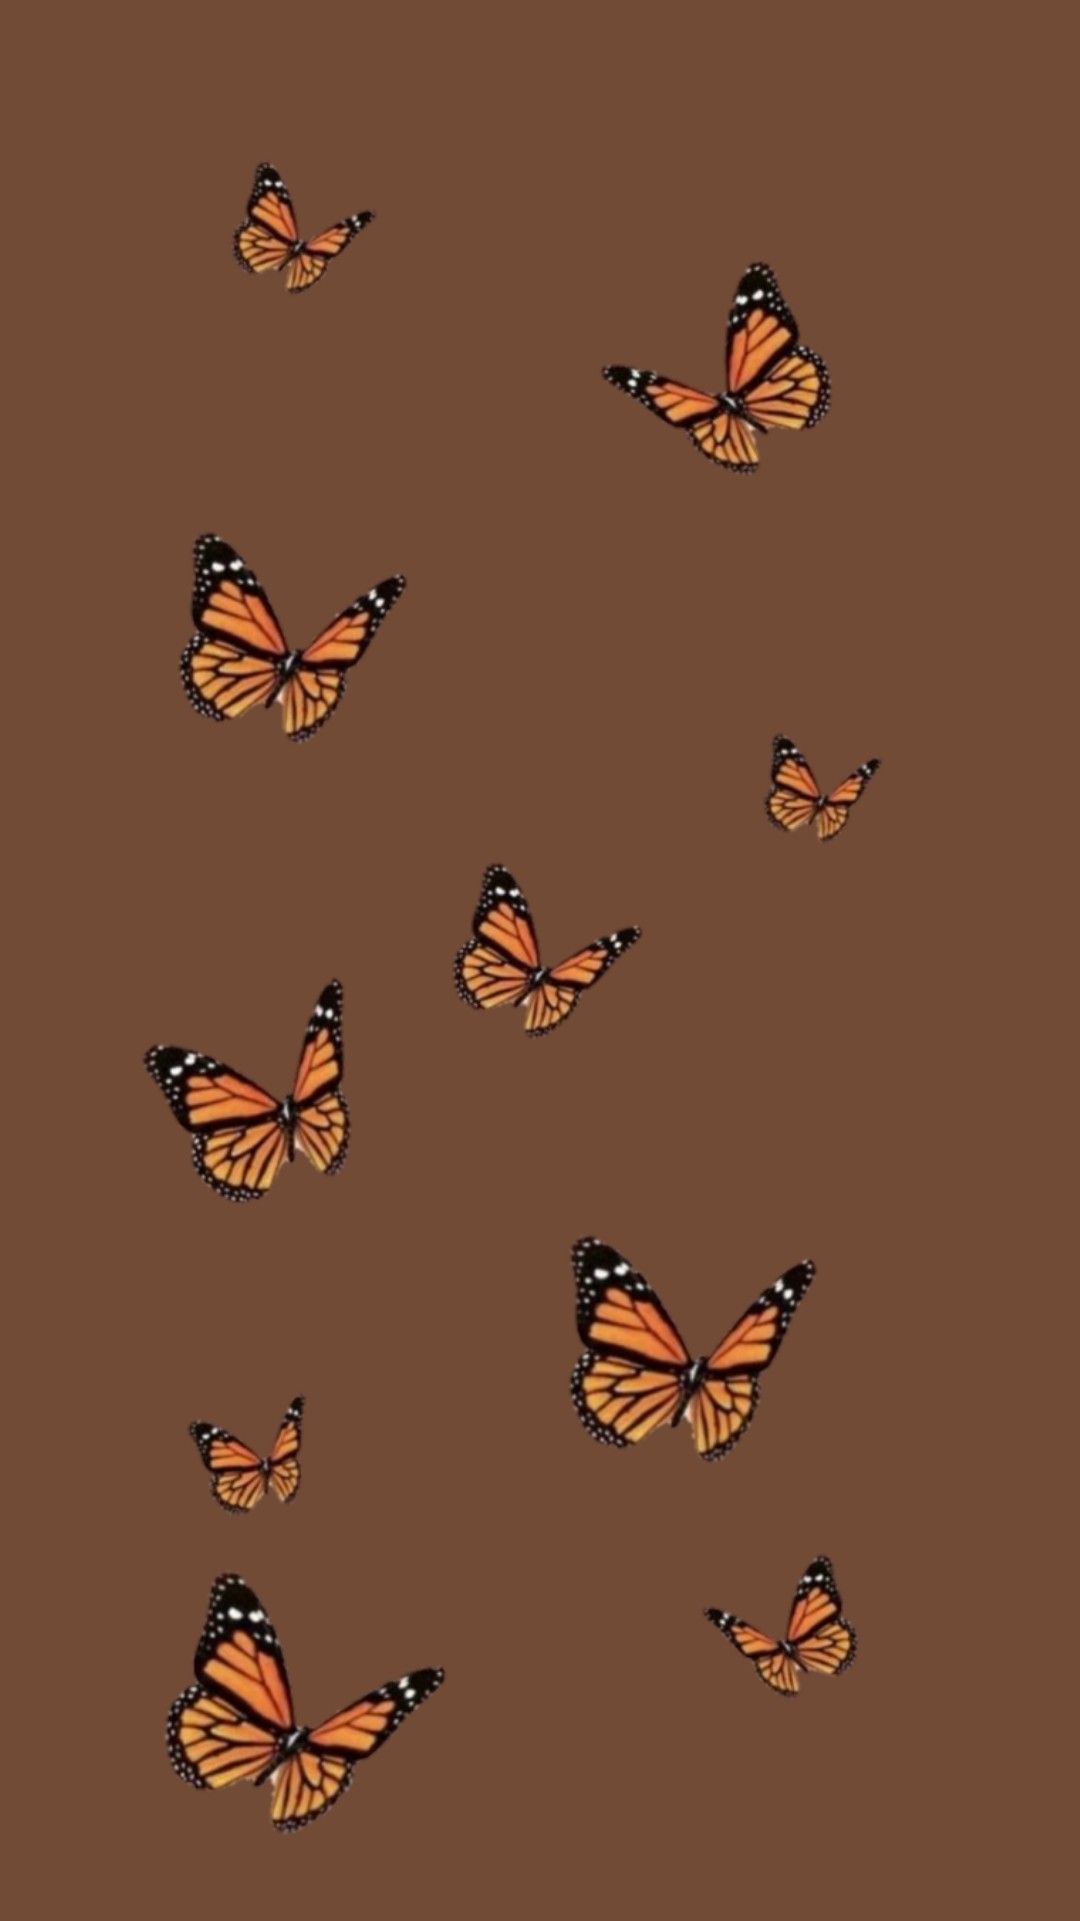 созданные мной пины. Aesthetic iphone wallpaper, Butterfly wallpaper, Boho wallpaper